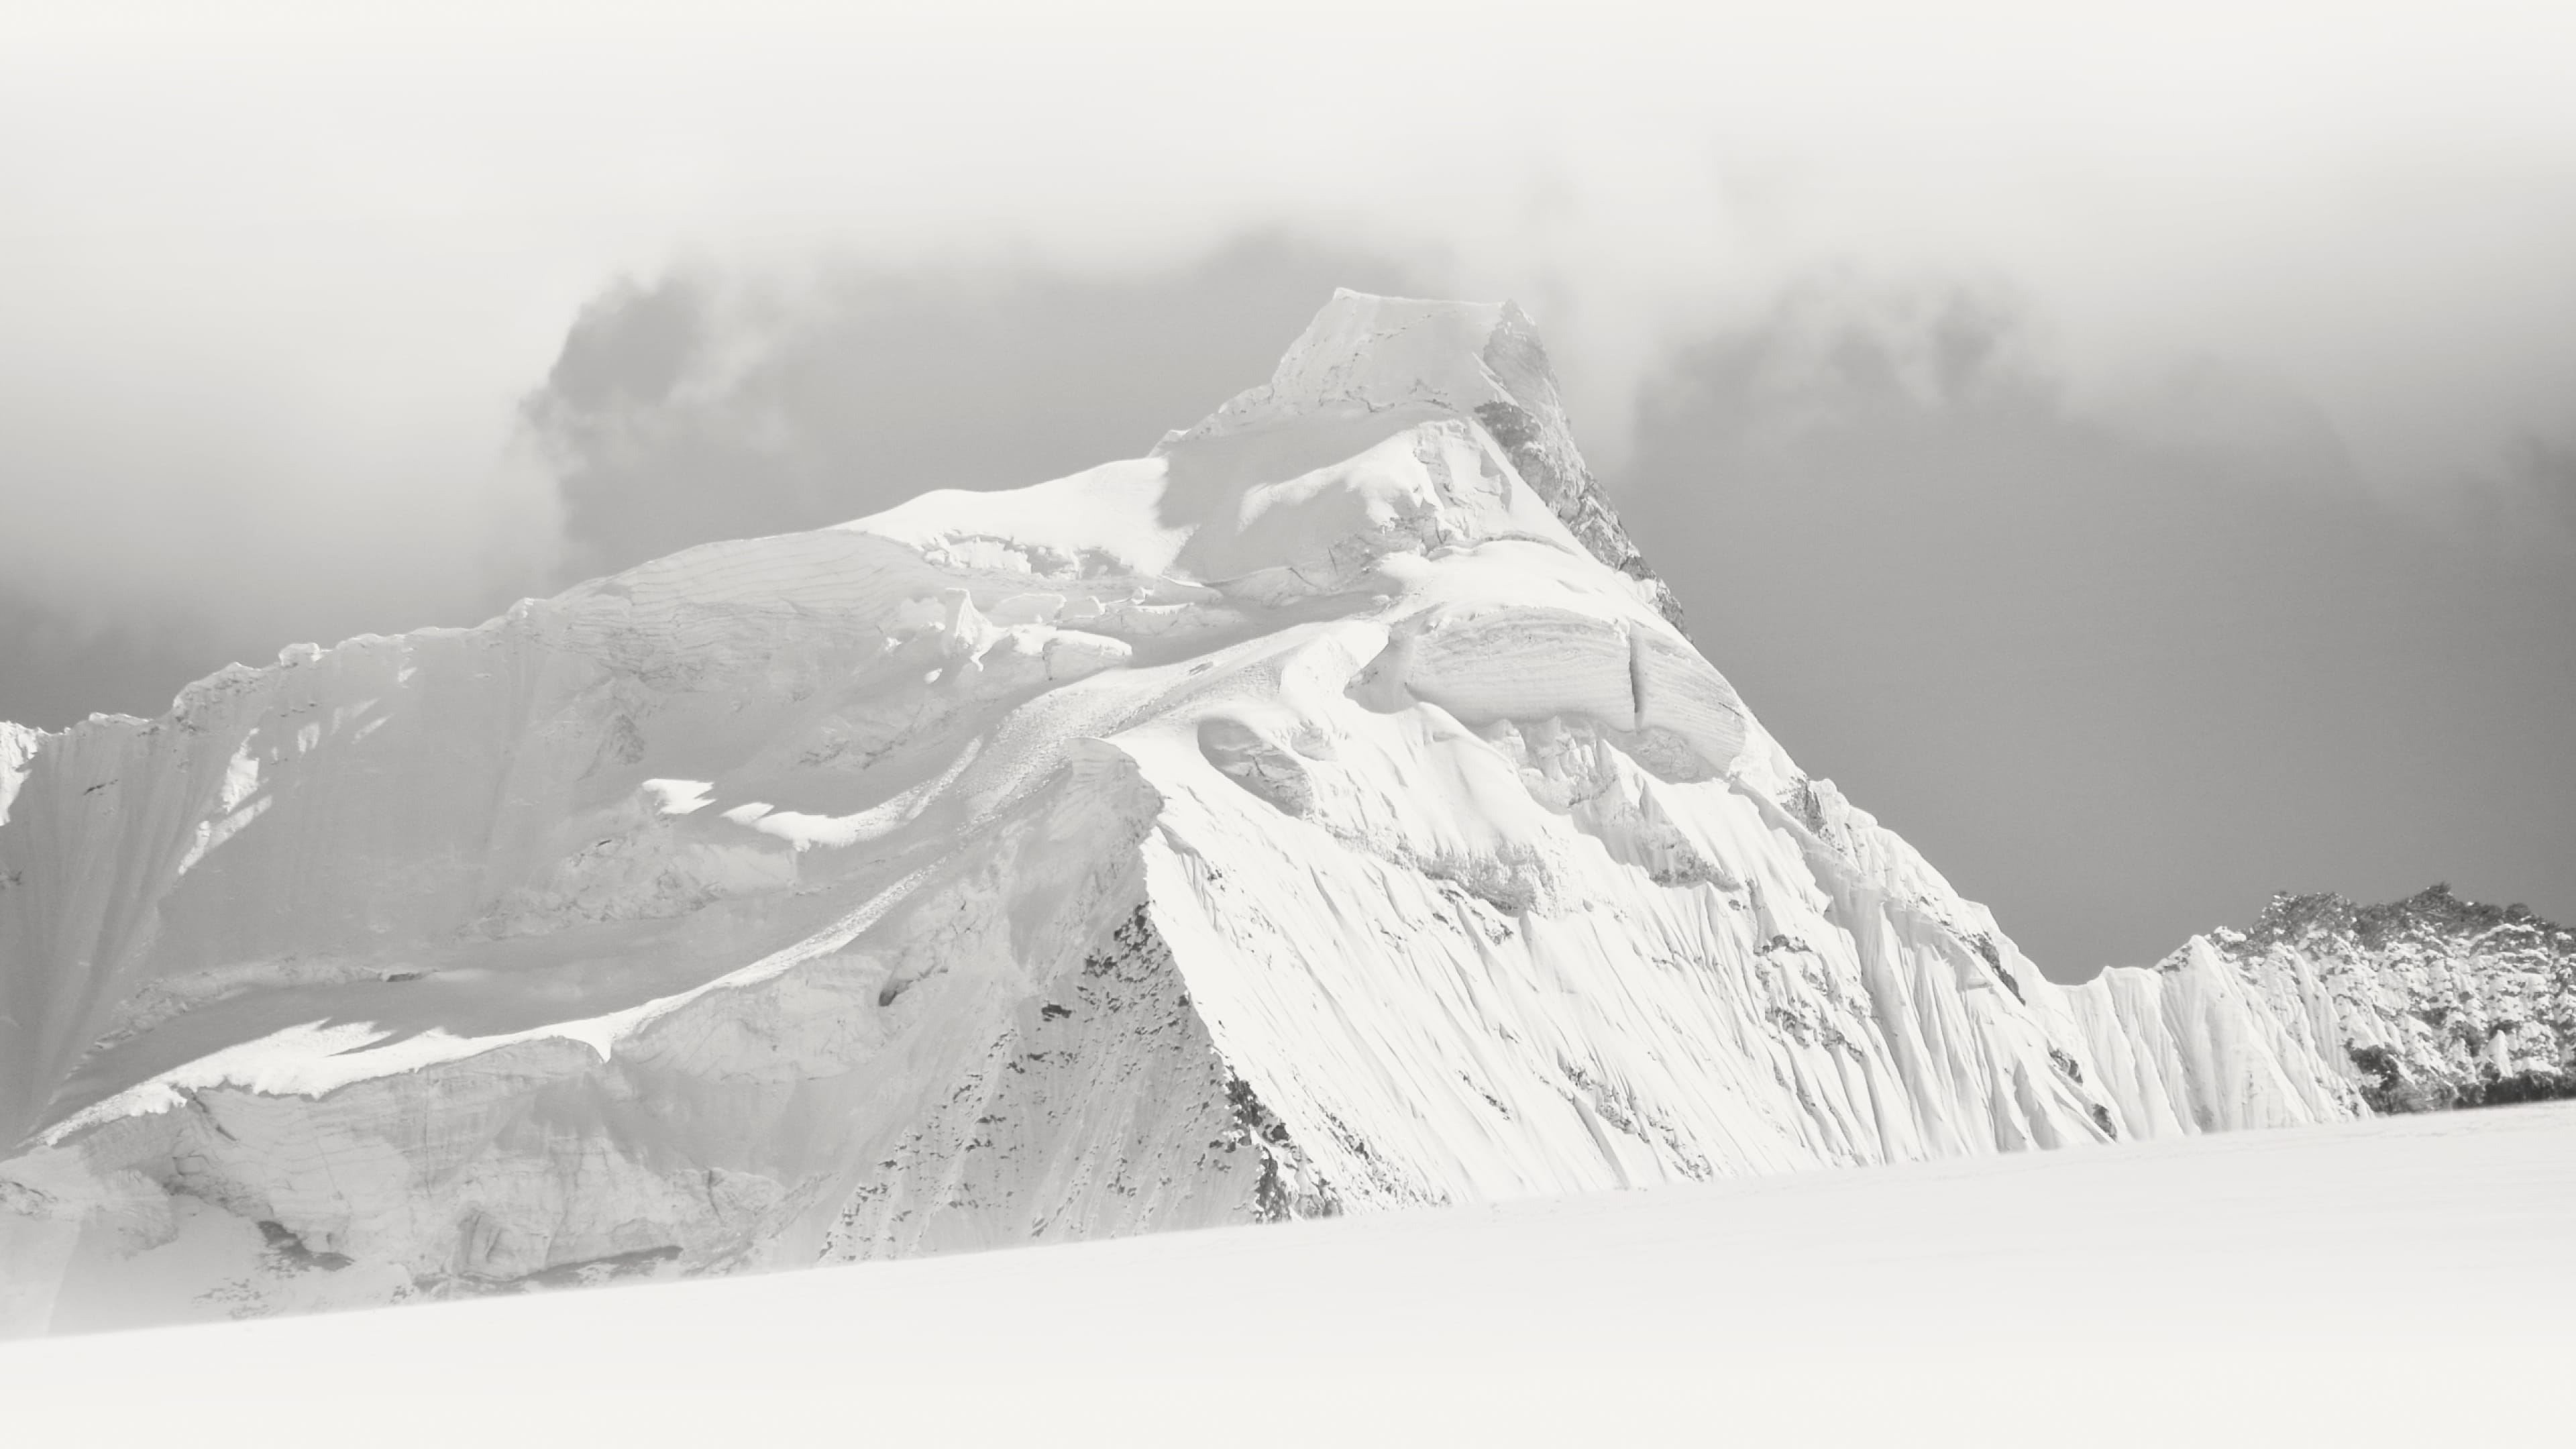 image-mountain-bhutan-background-jpg.jpg